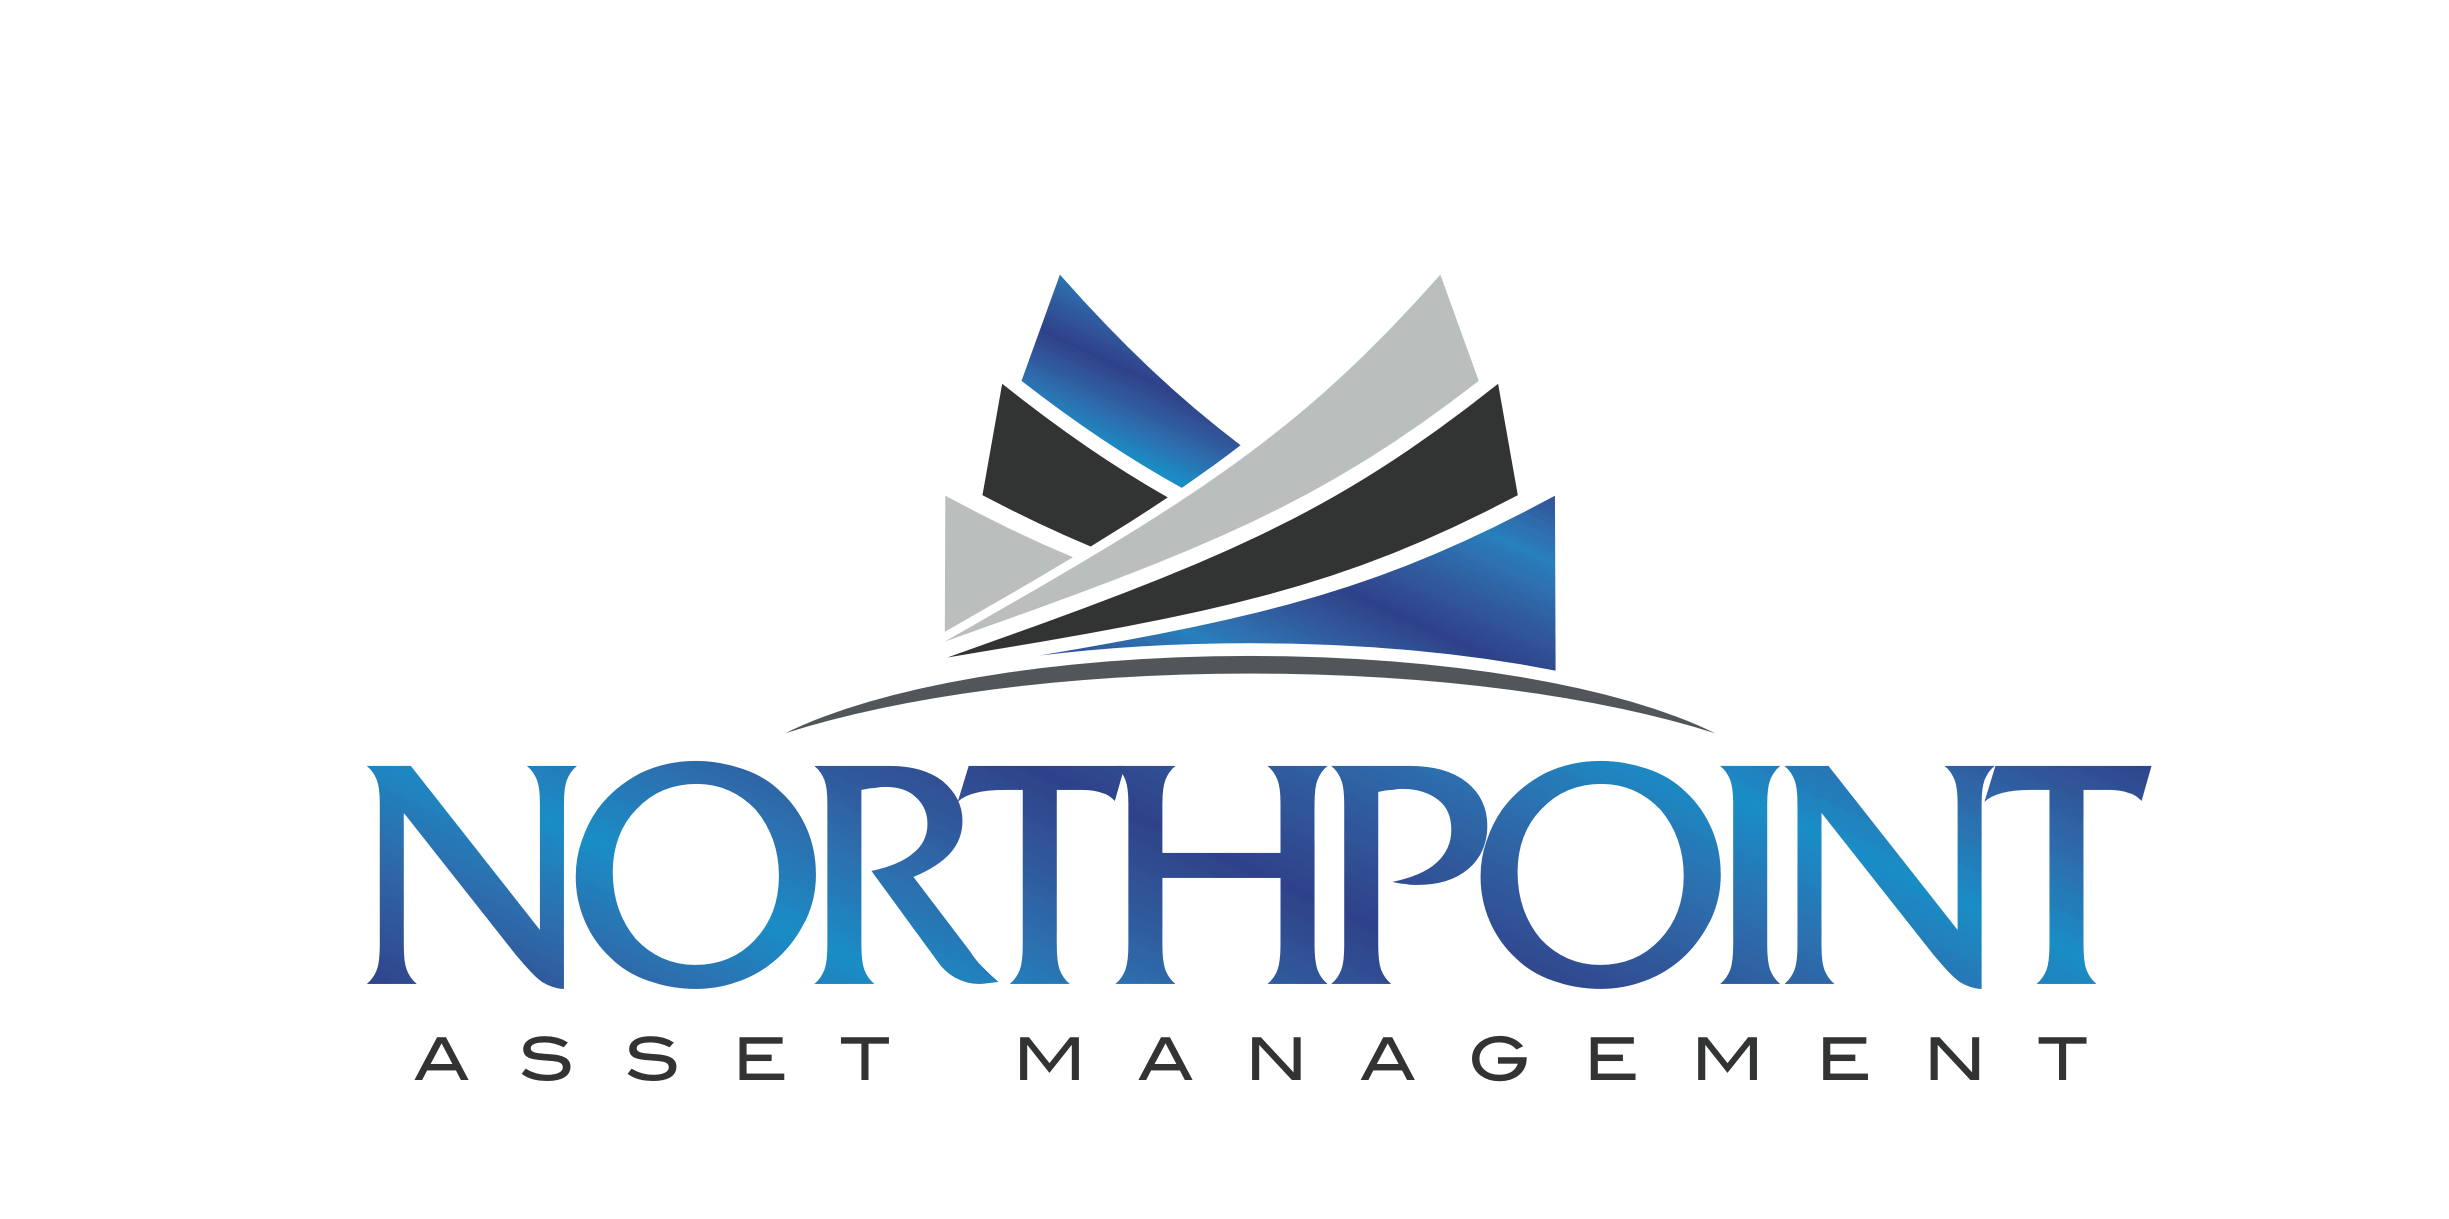 Northpoint Asset Management - Dallas logo